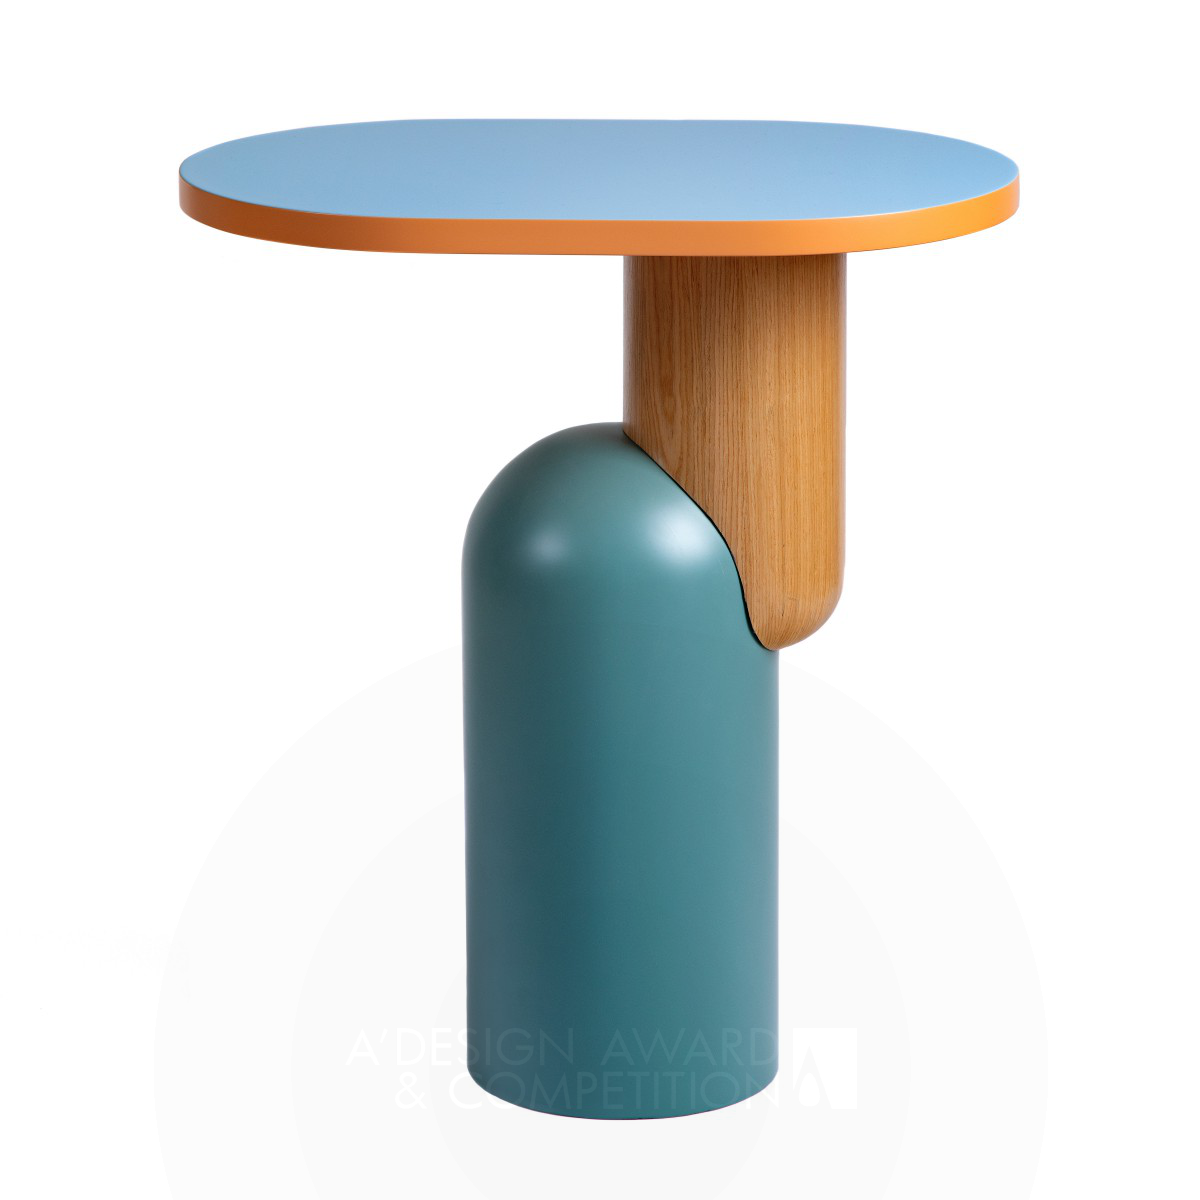 Sertao Side Table by Gabriela Campos